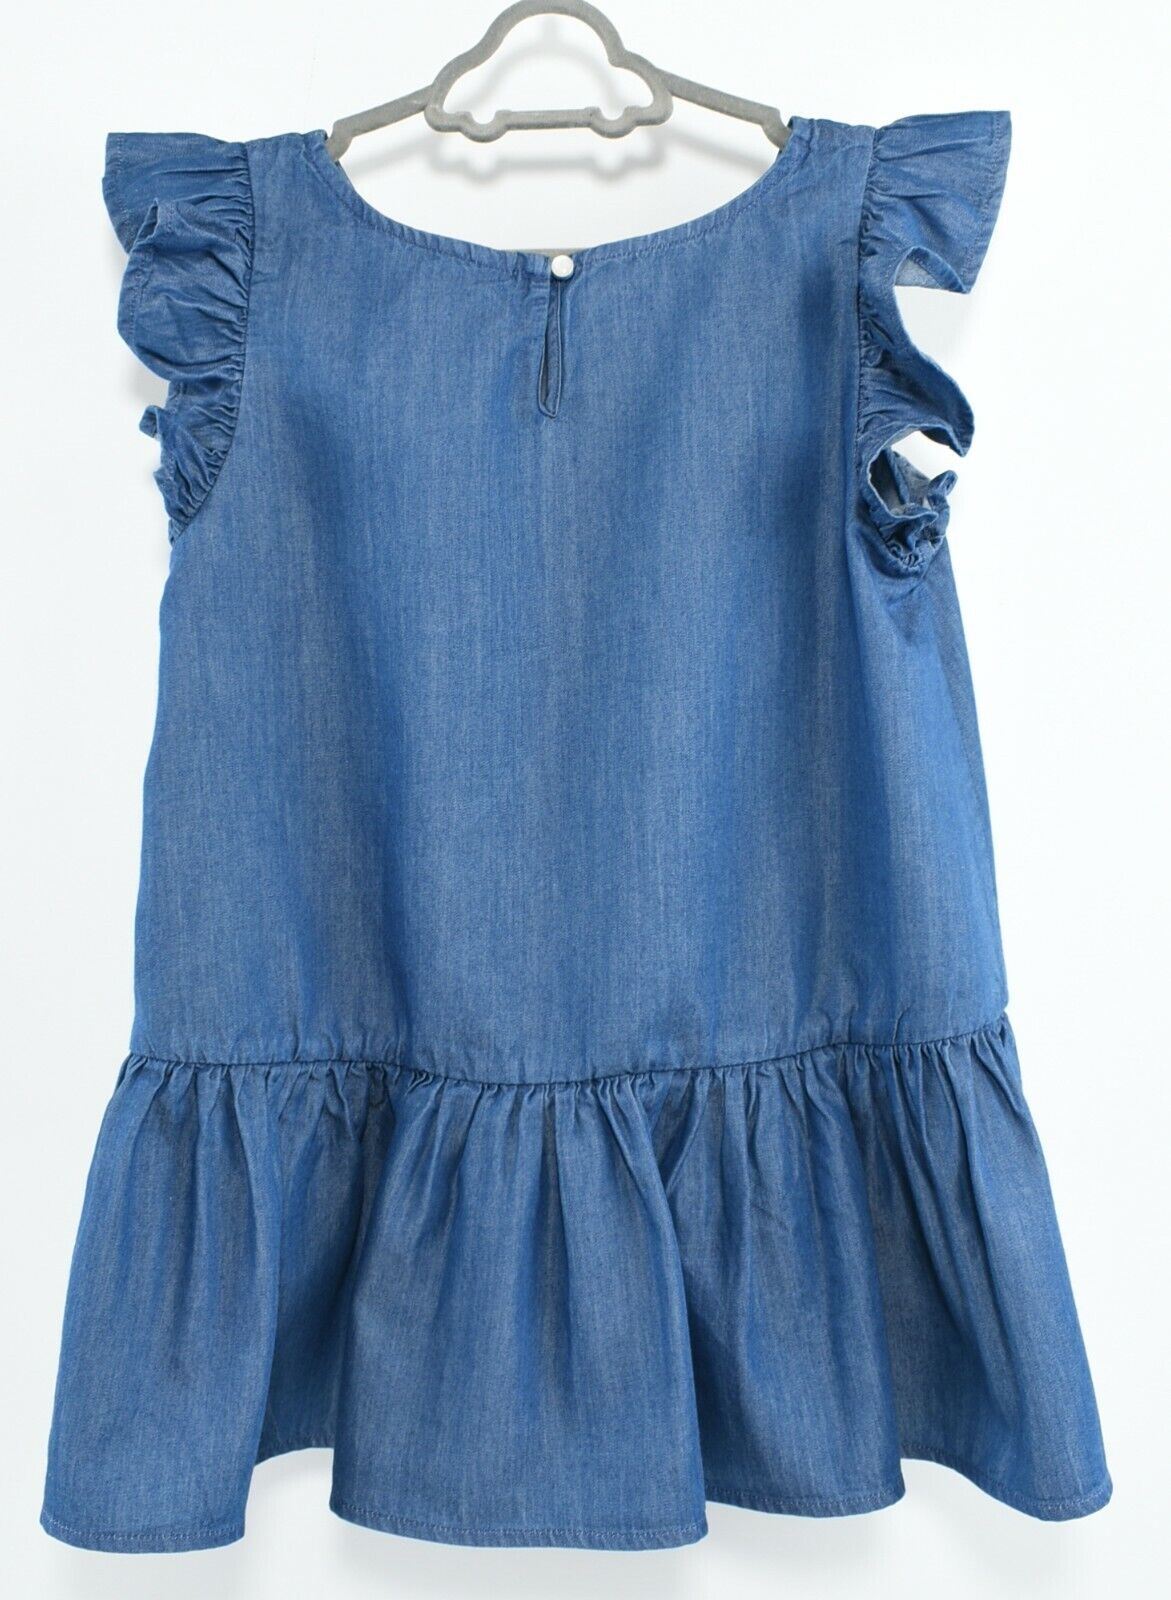 POLO RALPH LAUREN Girls' Blue Chambray Top, Cotton/Tencel, size 14 years